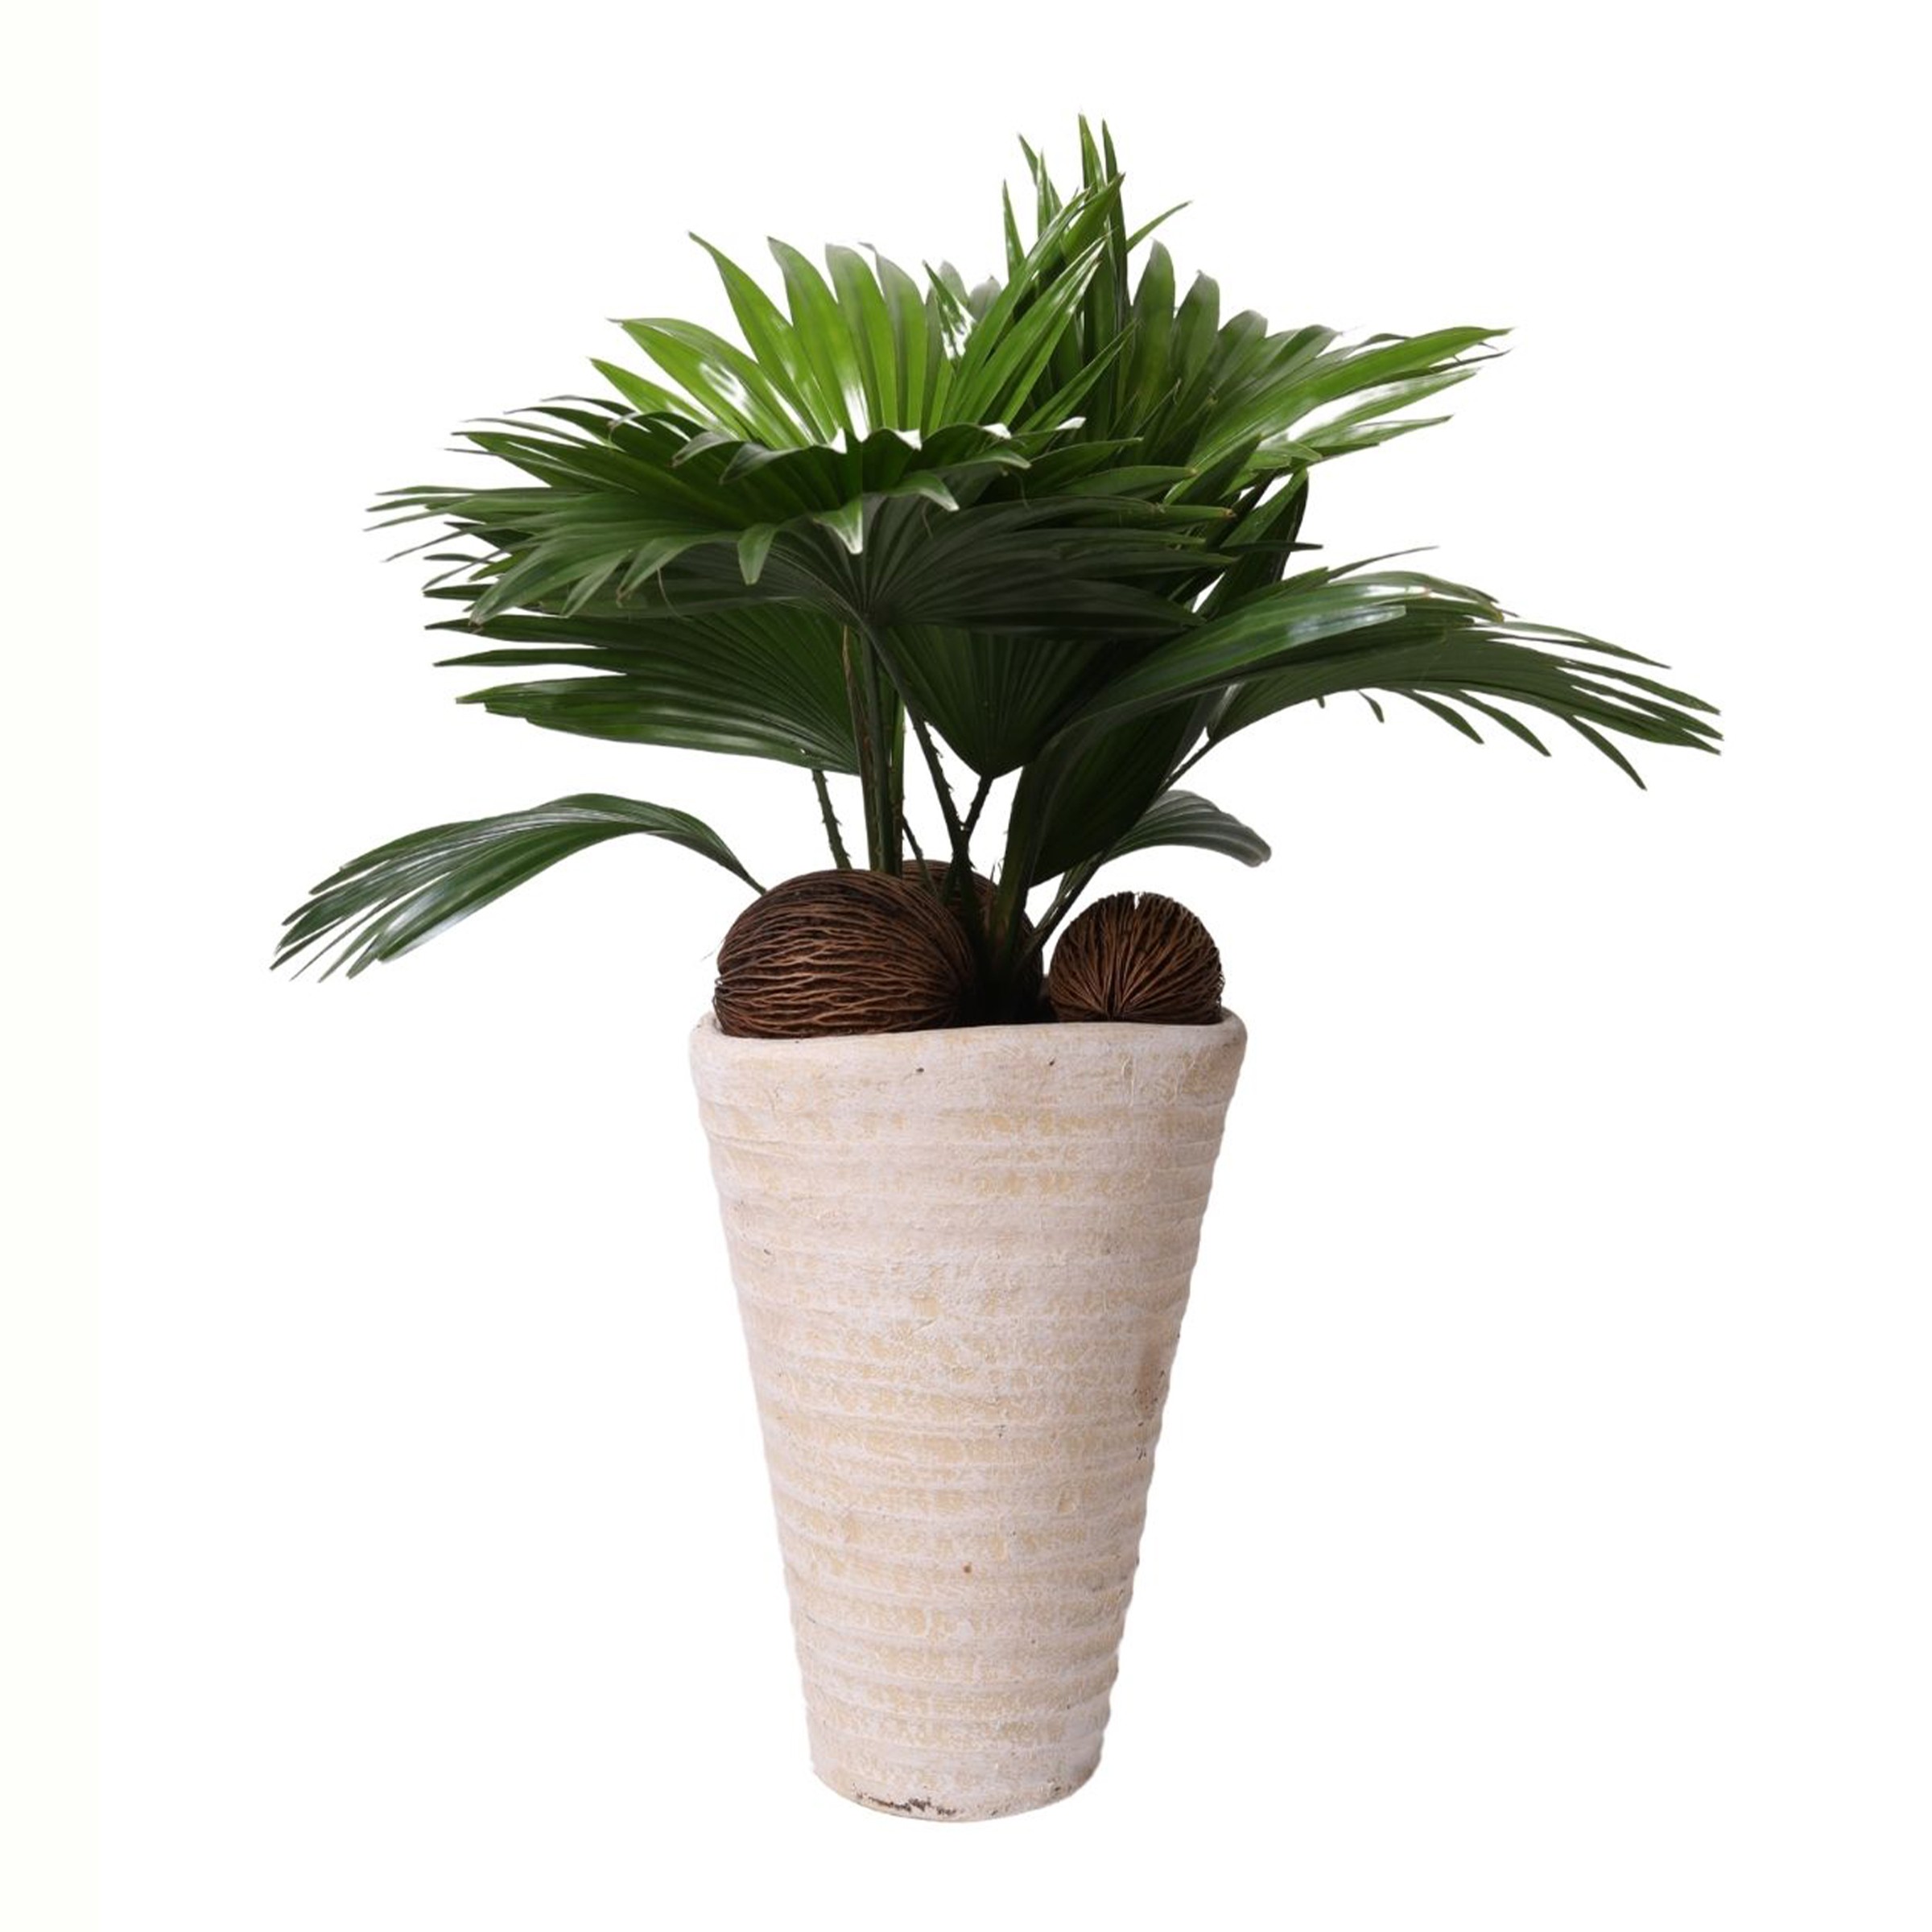 Beyaz Dekoratif Saksılı Livistona Palmiyesi (Livistona Rotundifolia)